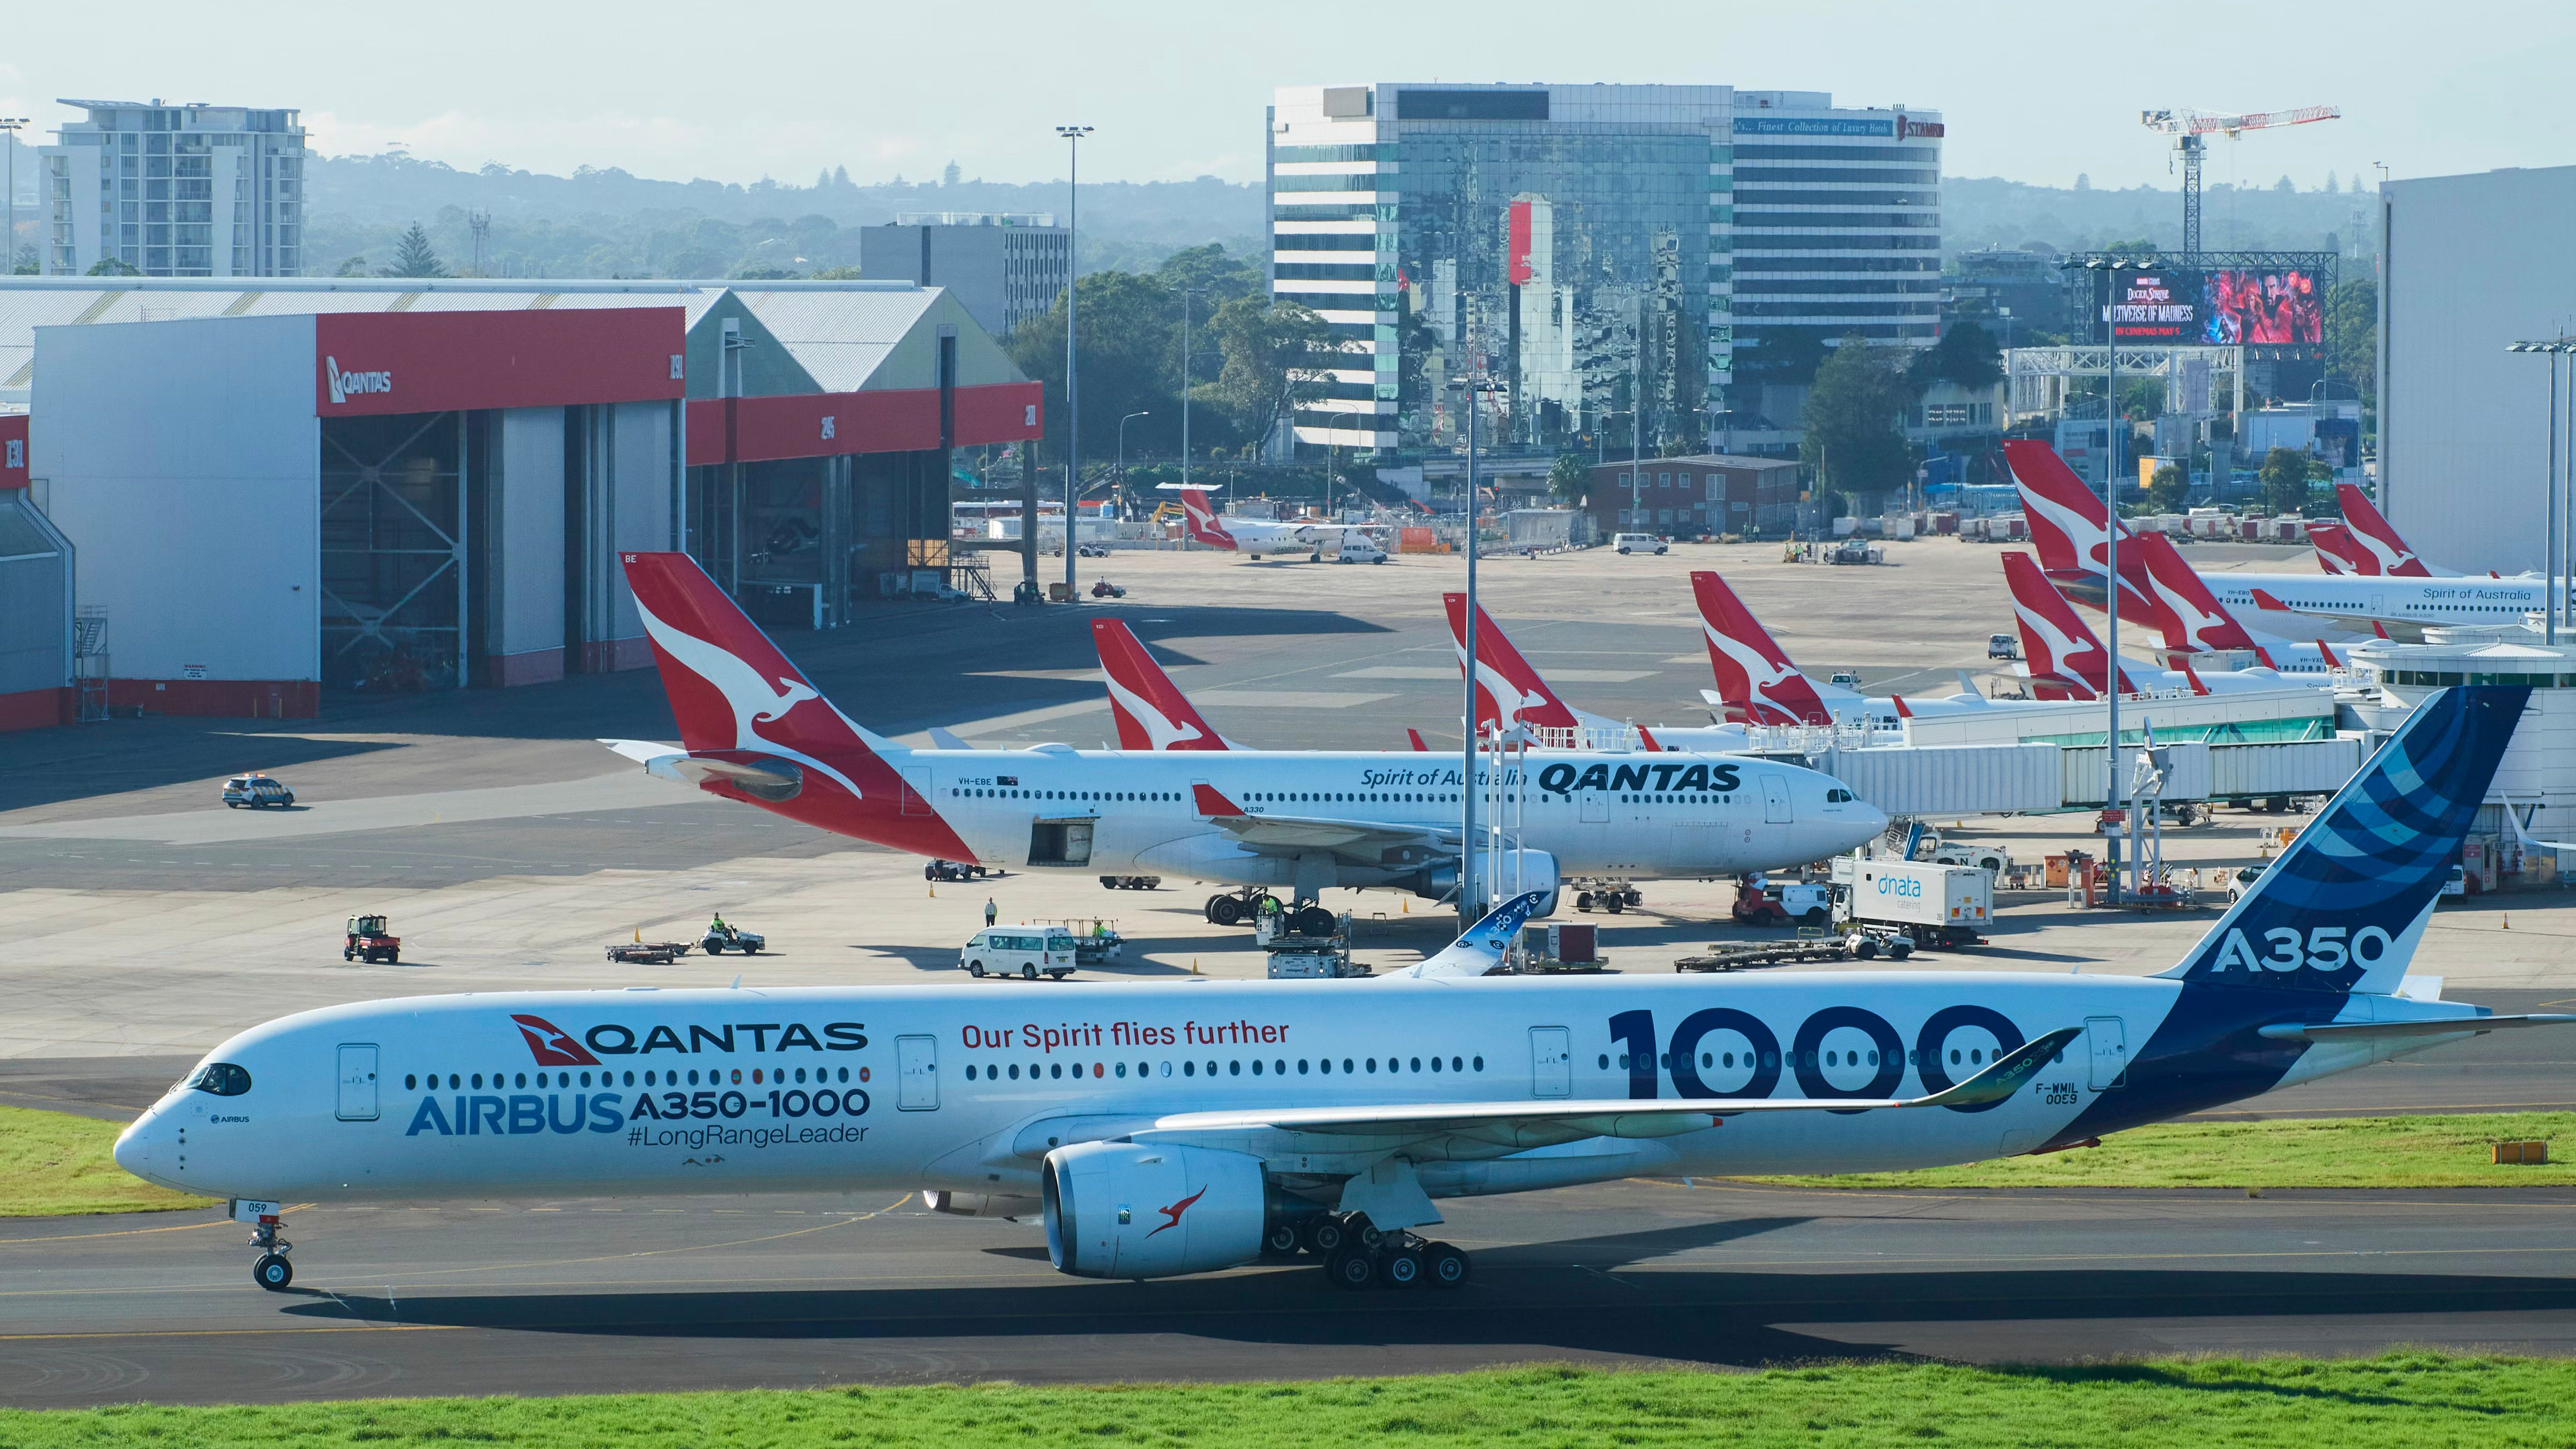 Airbus A350-1000 Sydney Airport Demonstration Flight